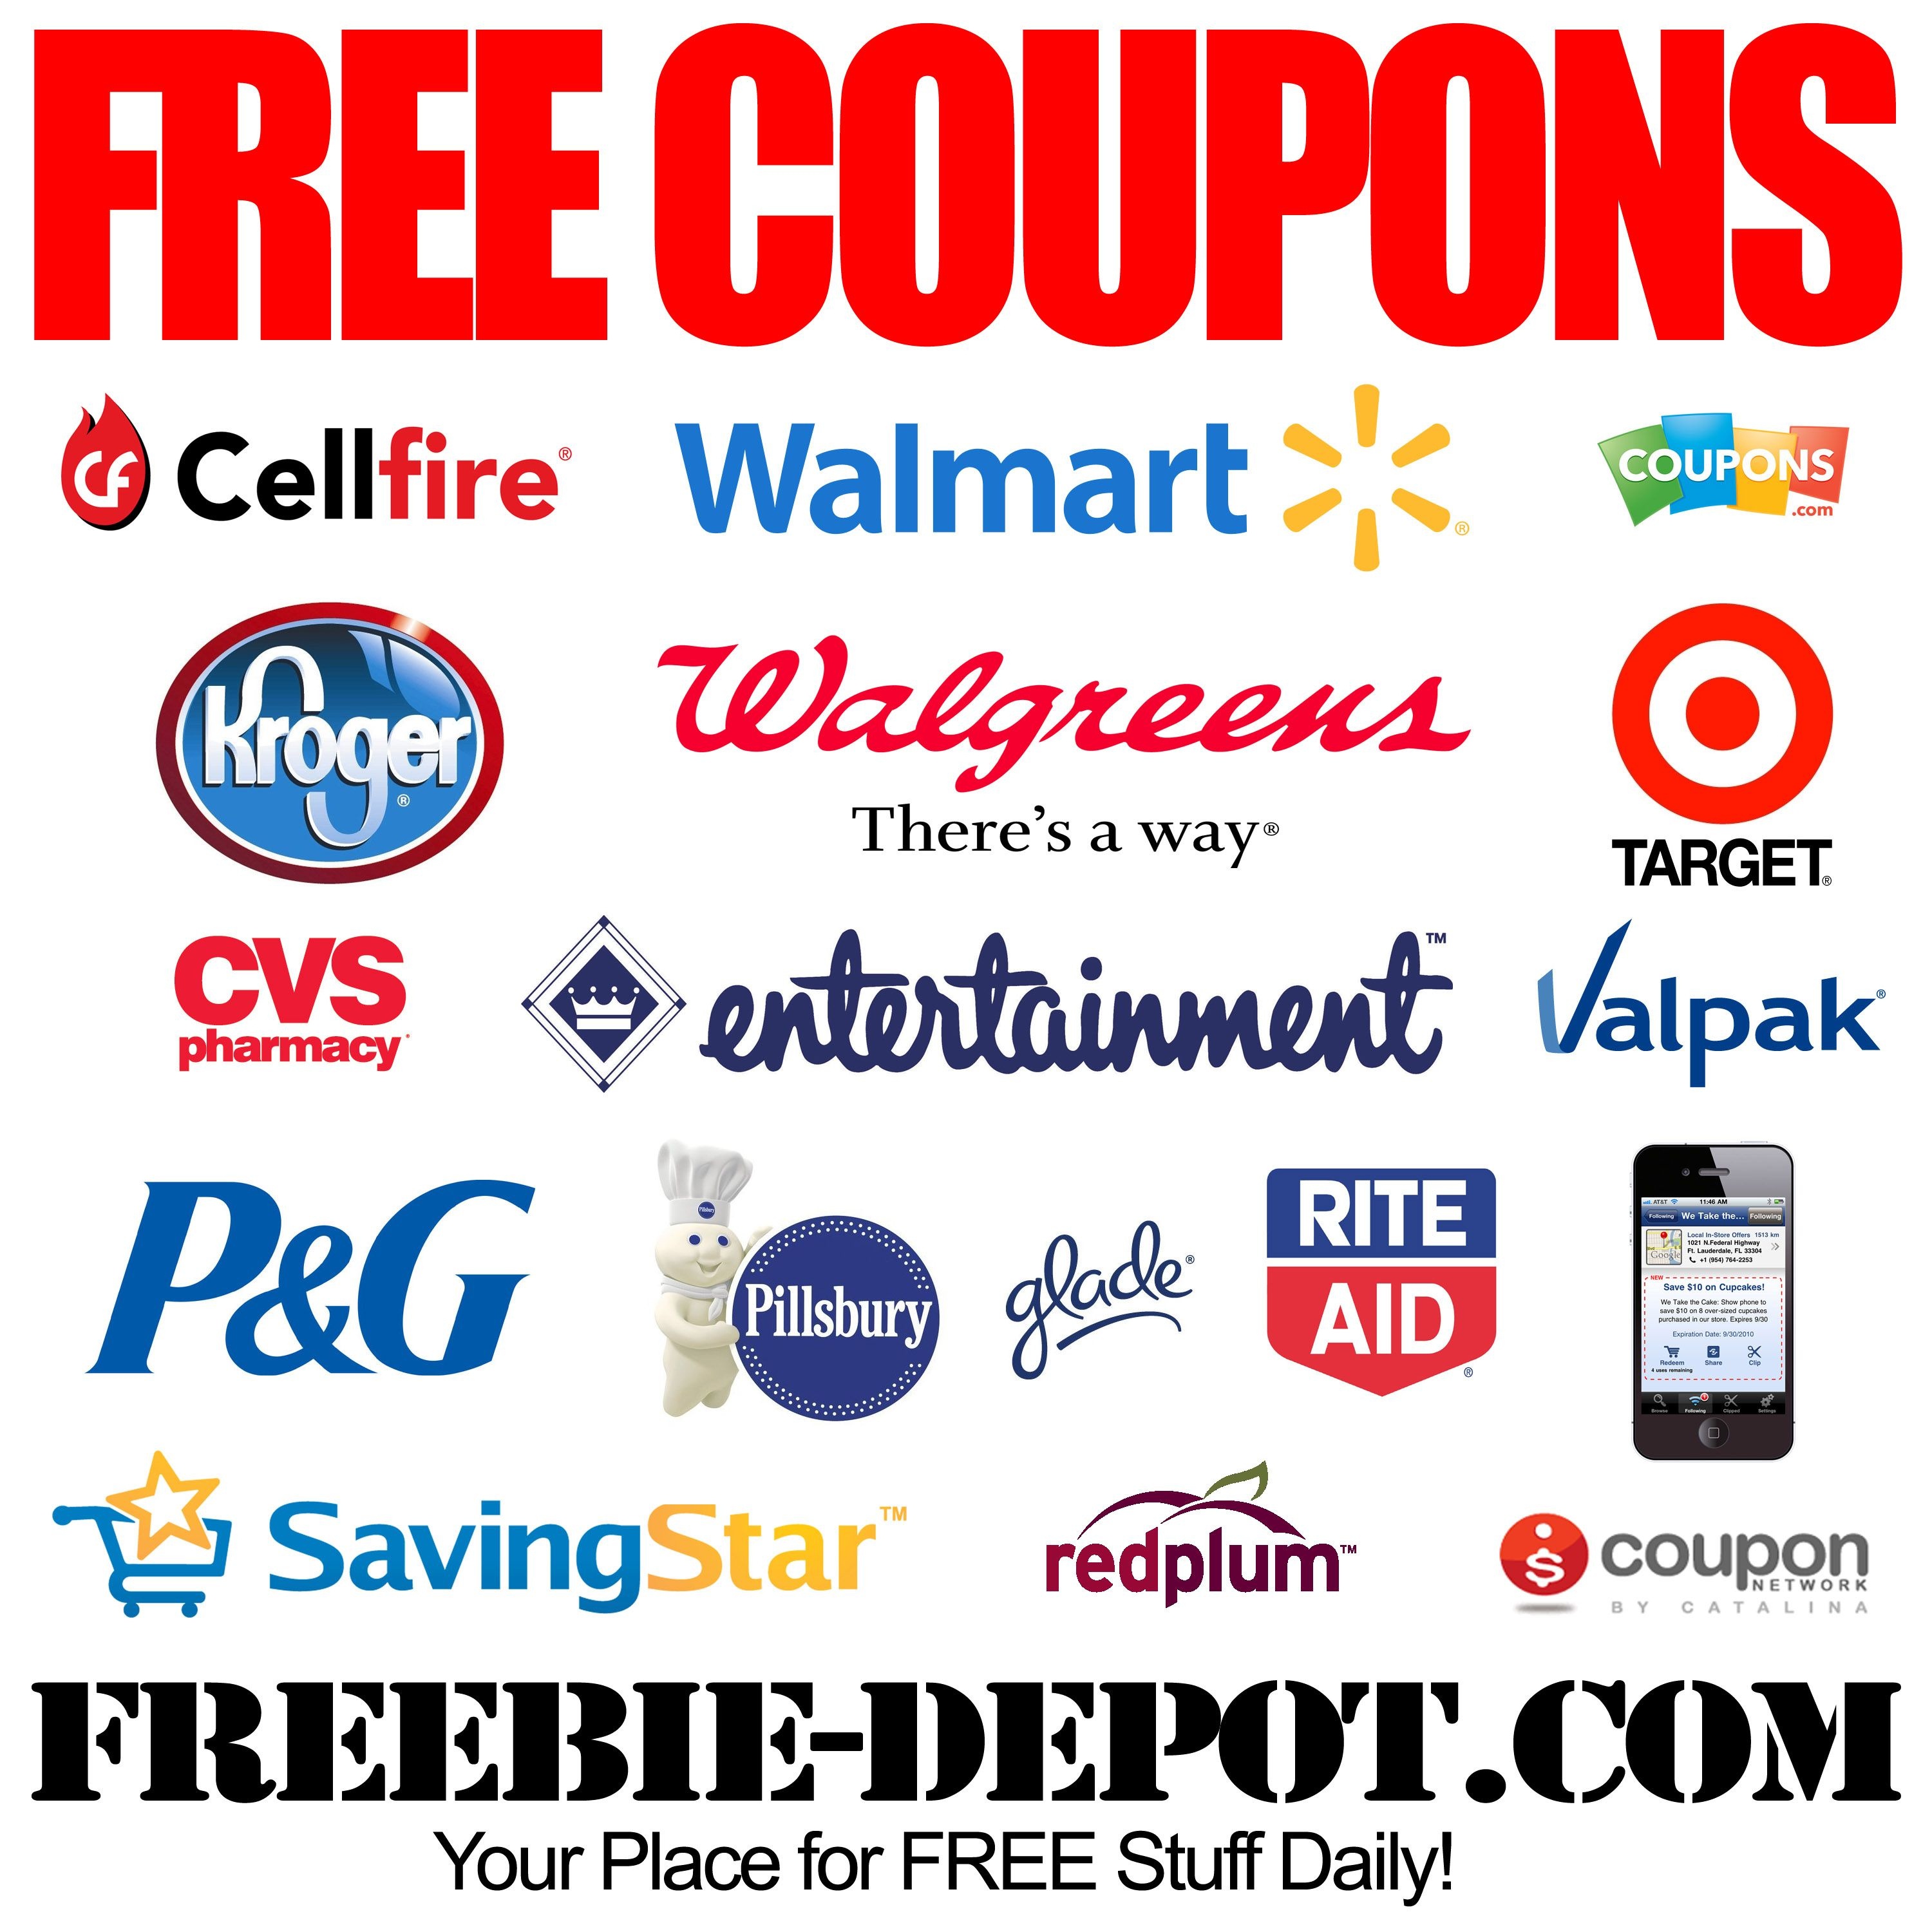 Free Coupons - Free Printable Coupons - Free Grocery Coupons - Free Printable Crest Coupons